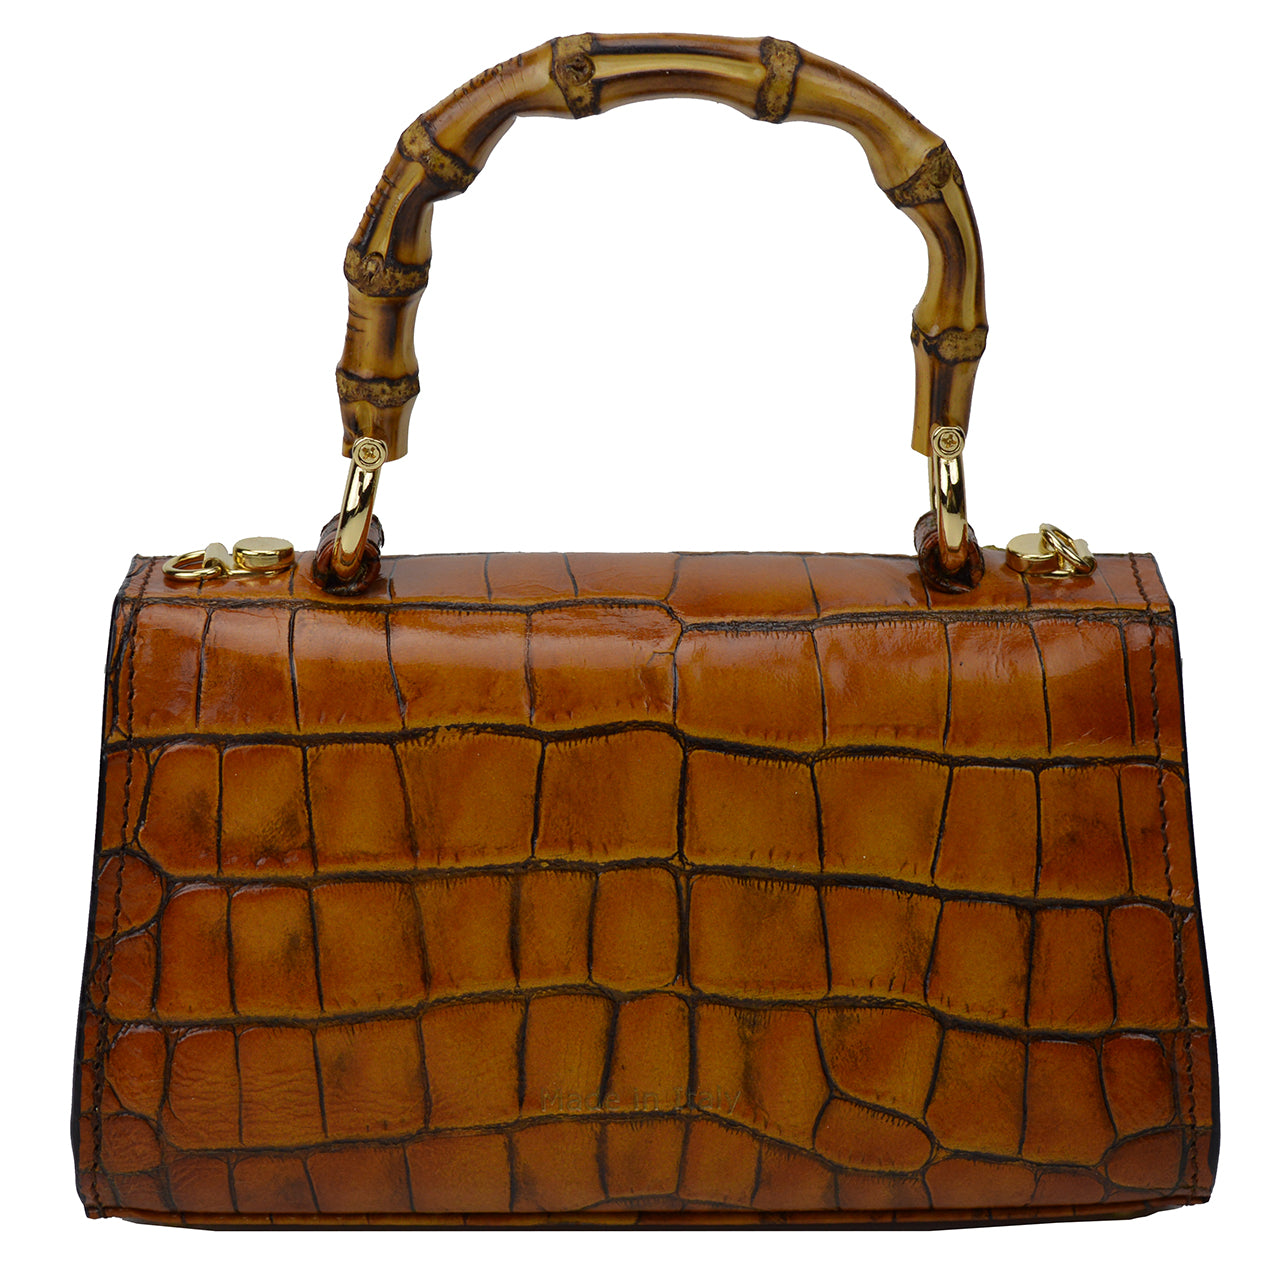 Pratesi Castalia Lady Bag in genuine Italian leather - Croco Embossed Leather Fuxia